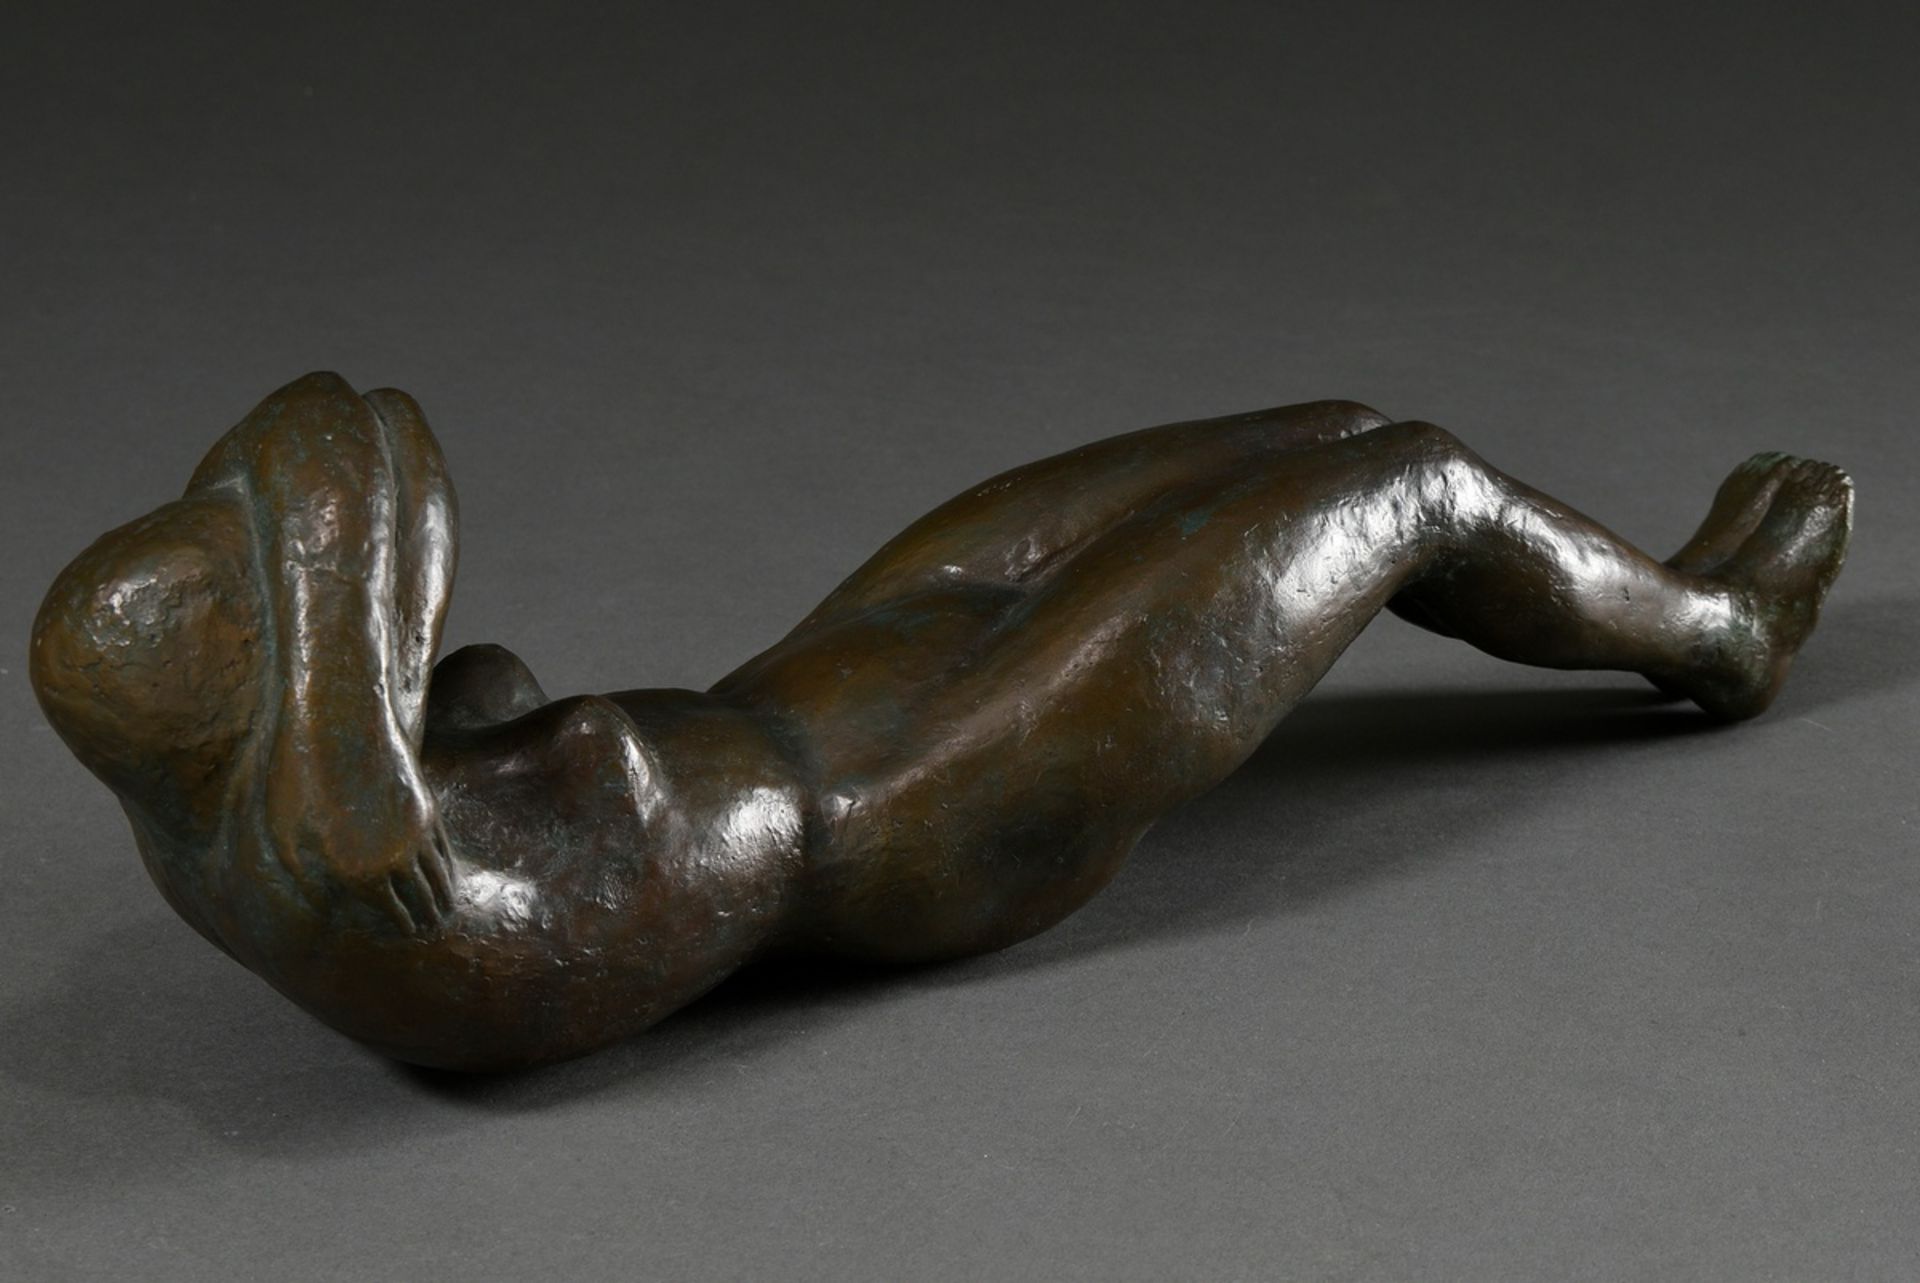 Woebcke, Albert Friedrich Christian (1896-1980) "Reclining female nude", bronze, hollow casting, in - Image 3 of 6